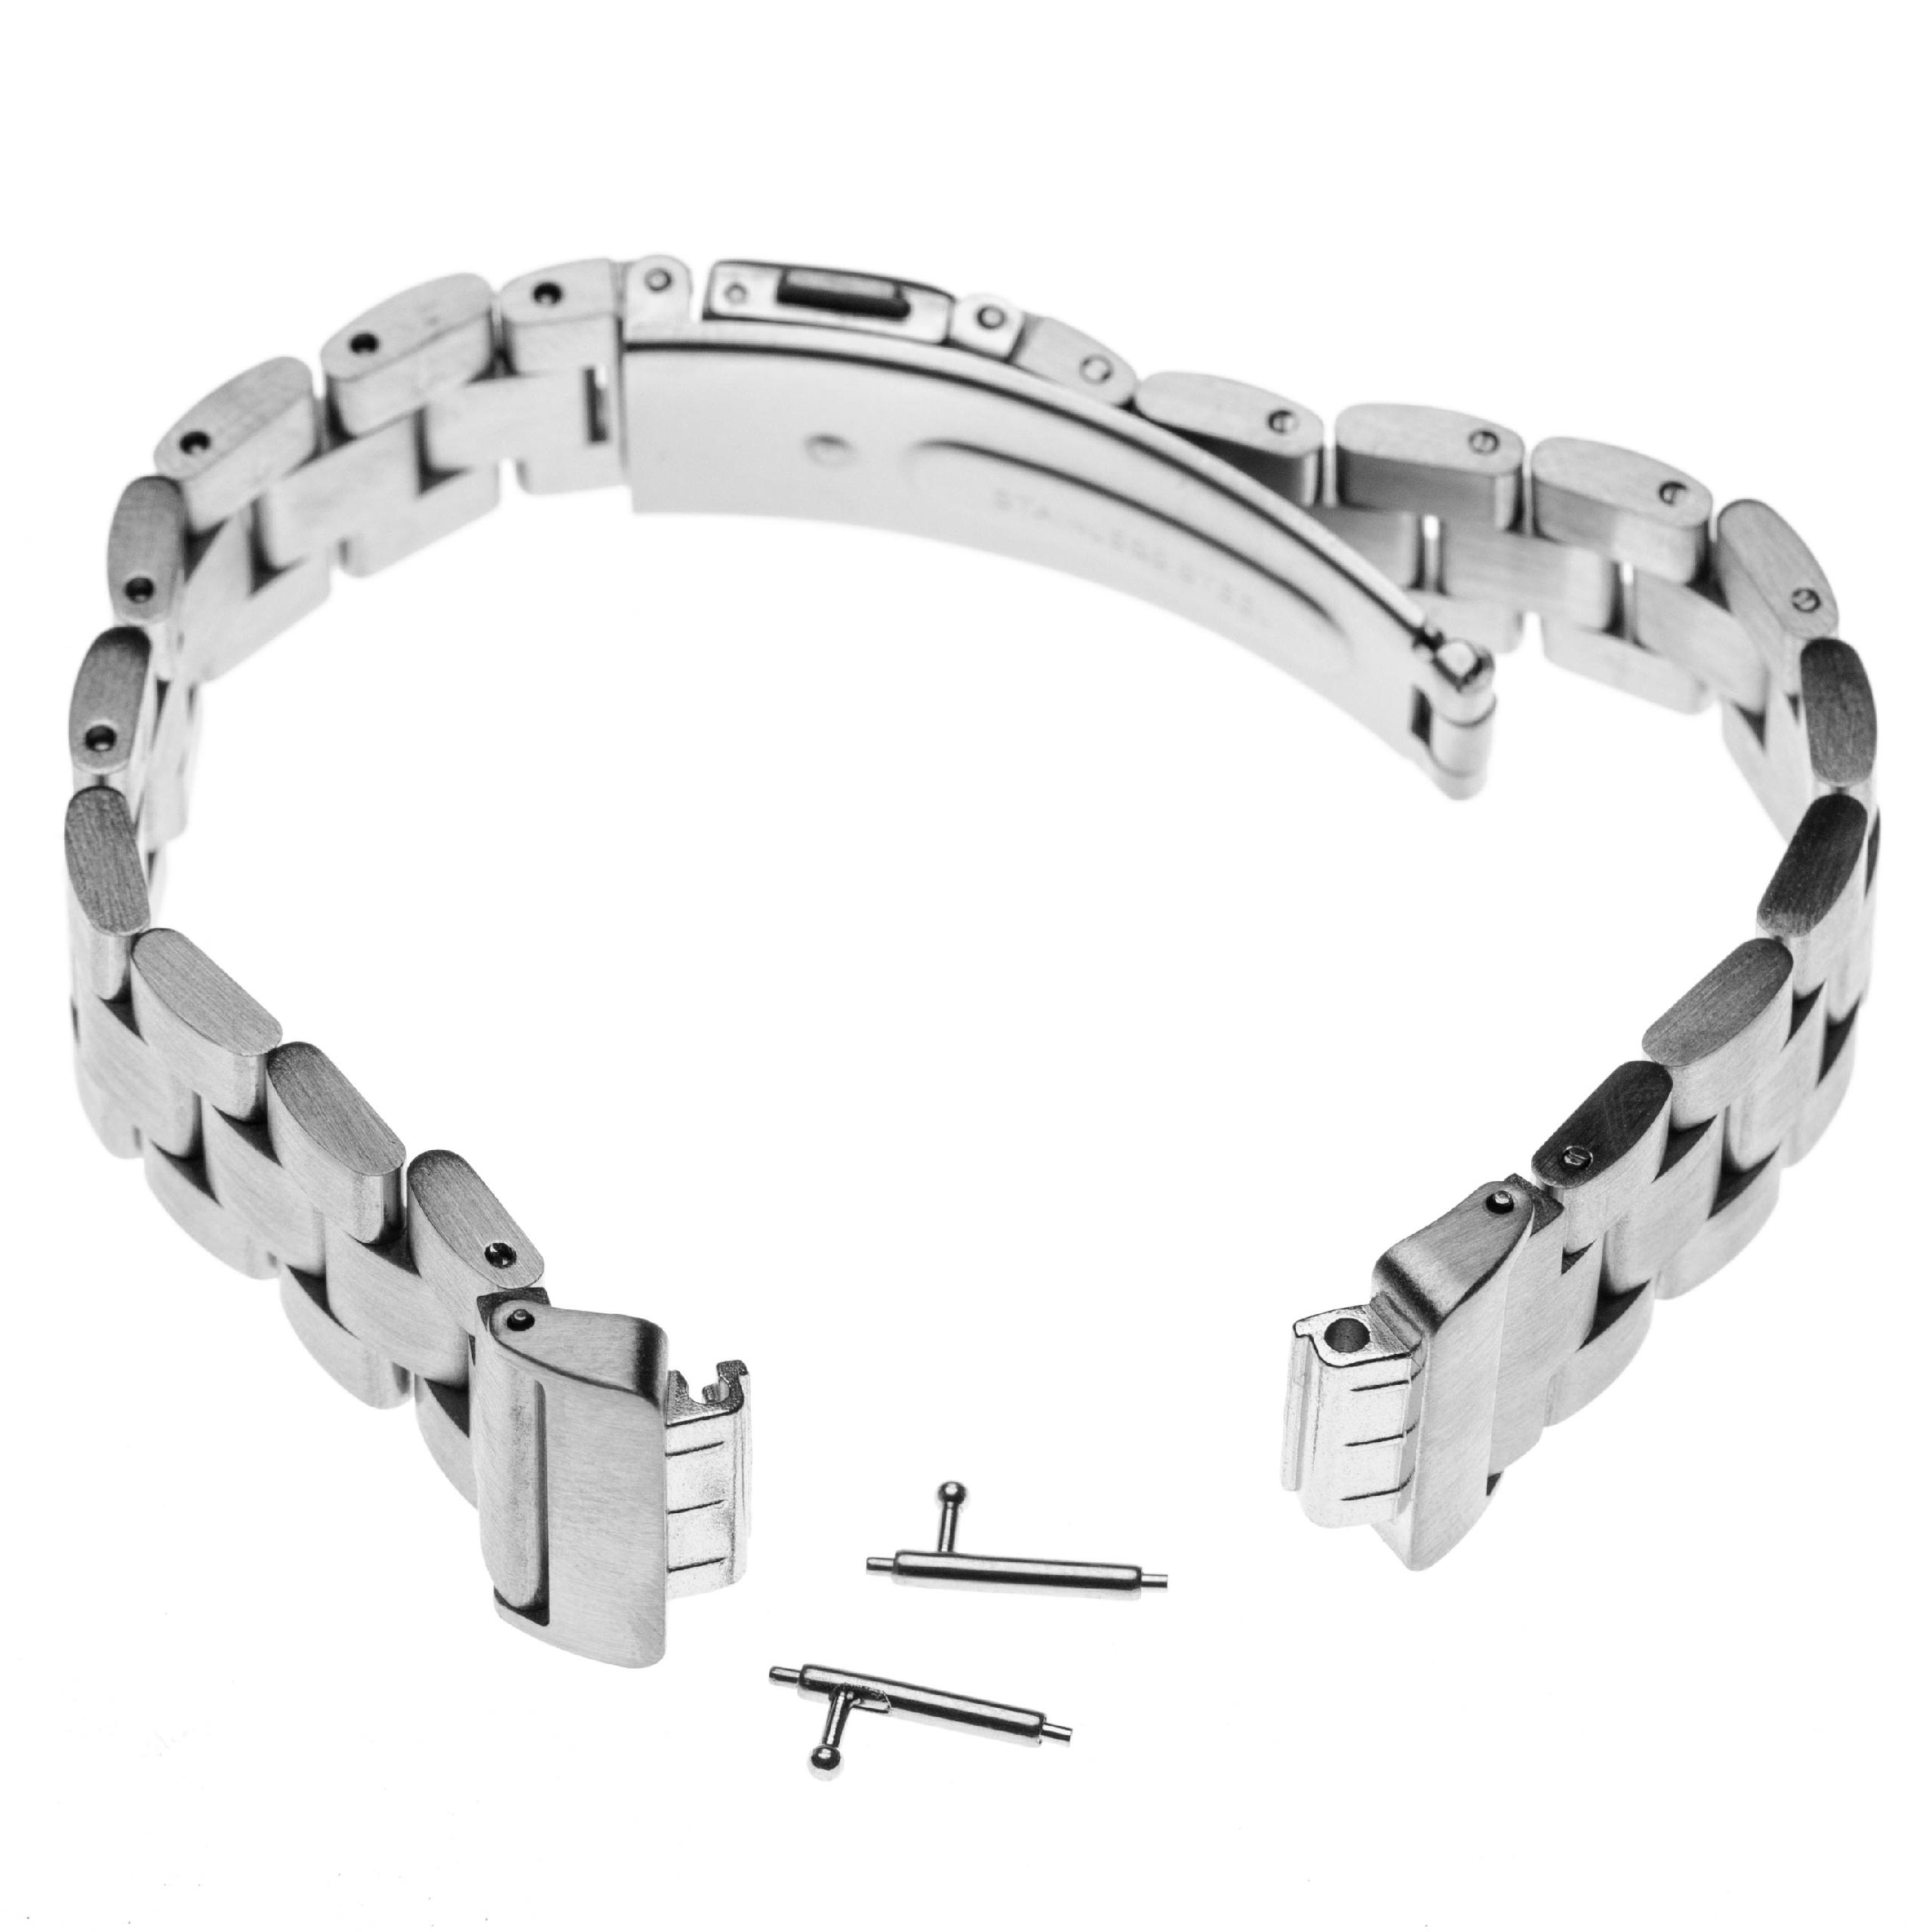 cinturino per Fitbit Smartwatch - 18 cm lunghezza, 14mm ampiezza, acciaio inox, argento